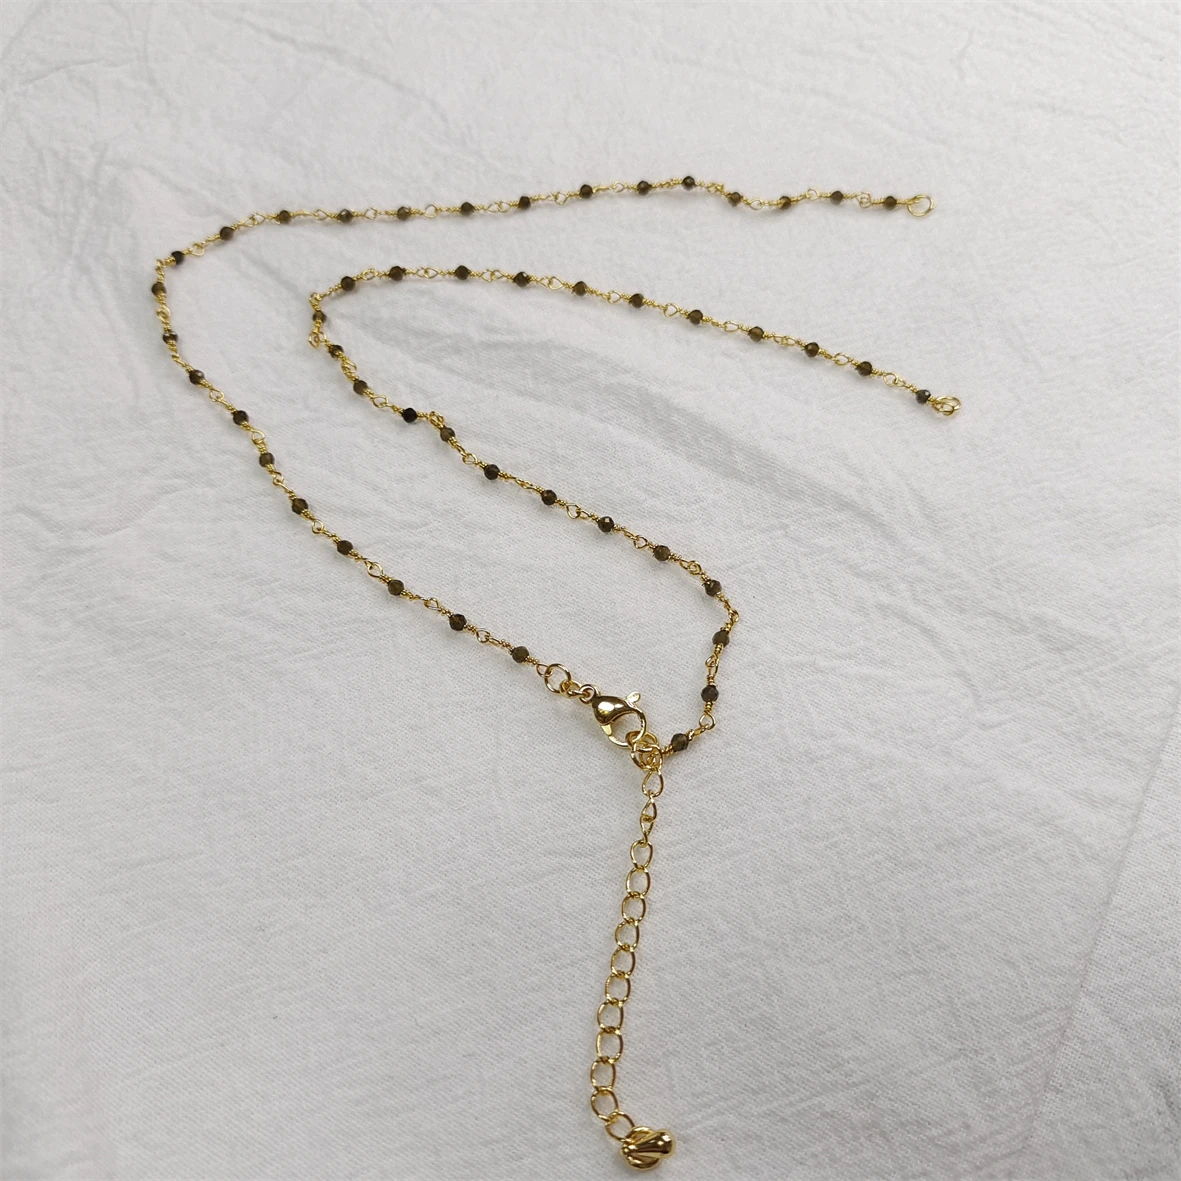 WT-BFN019 Procurement New Natural gem bead string Delicate chain